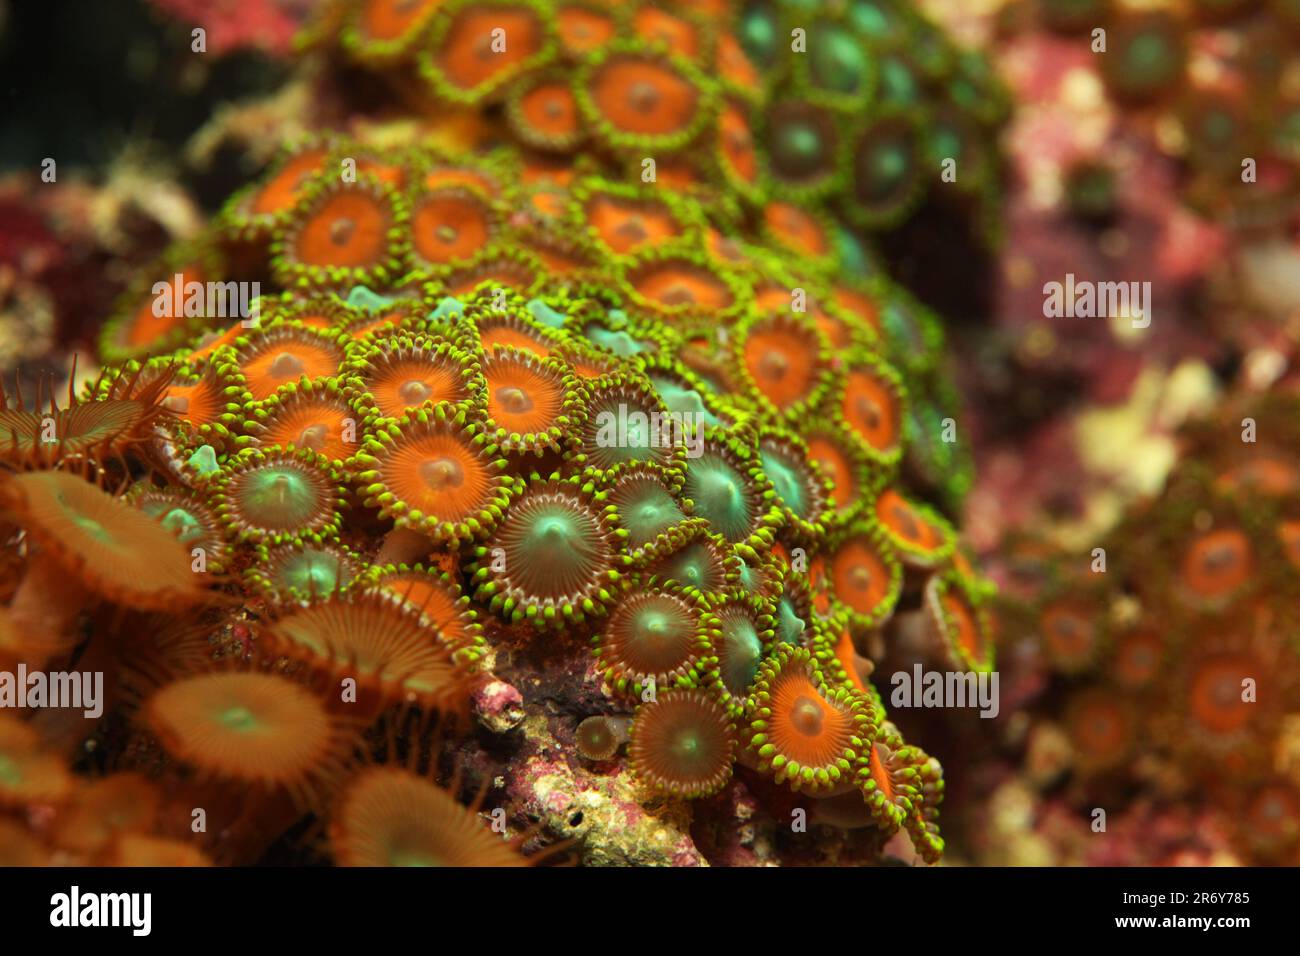 Small cluster of Soft corals [ Zoanthus sp. ] in marine reef  aquarium Stock Photo